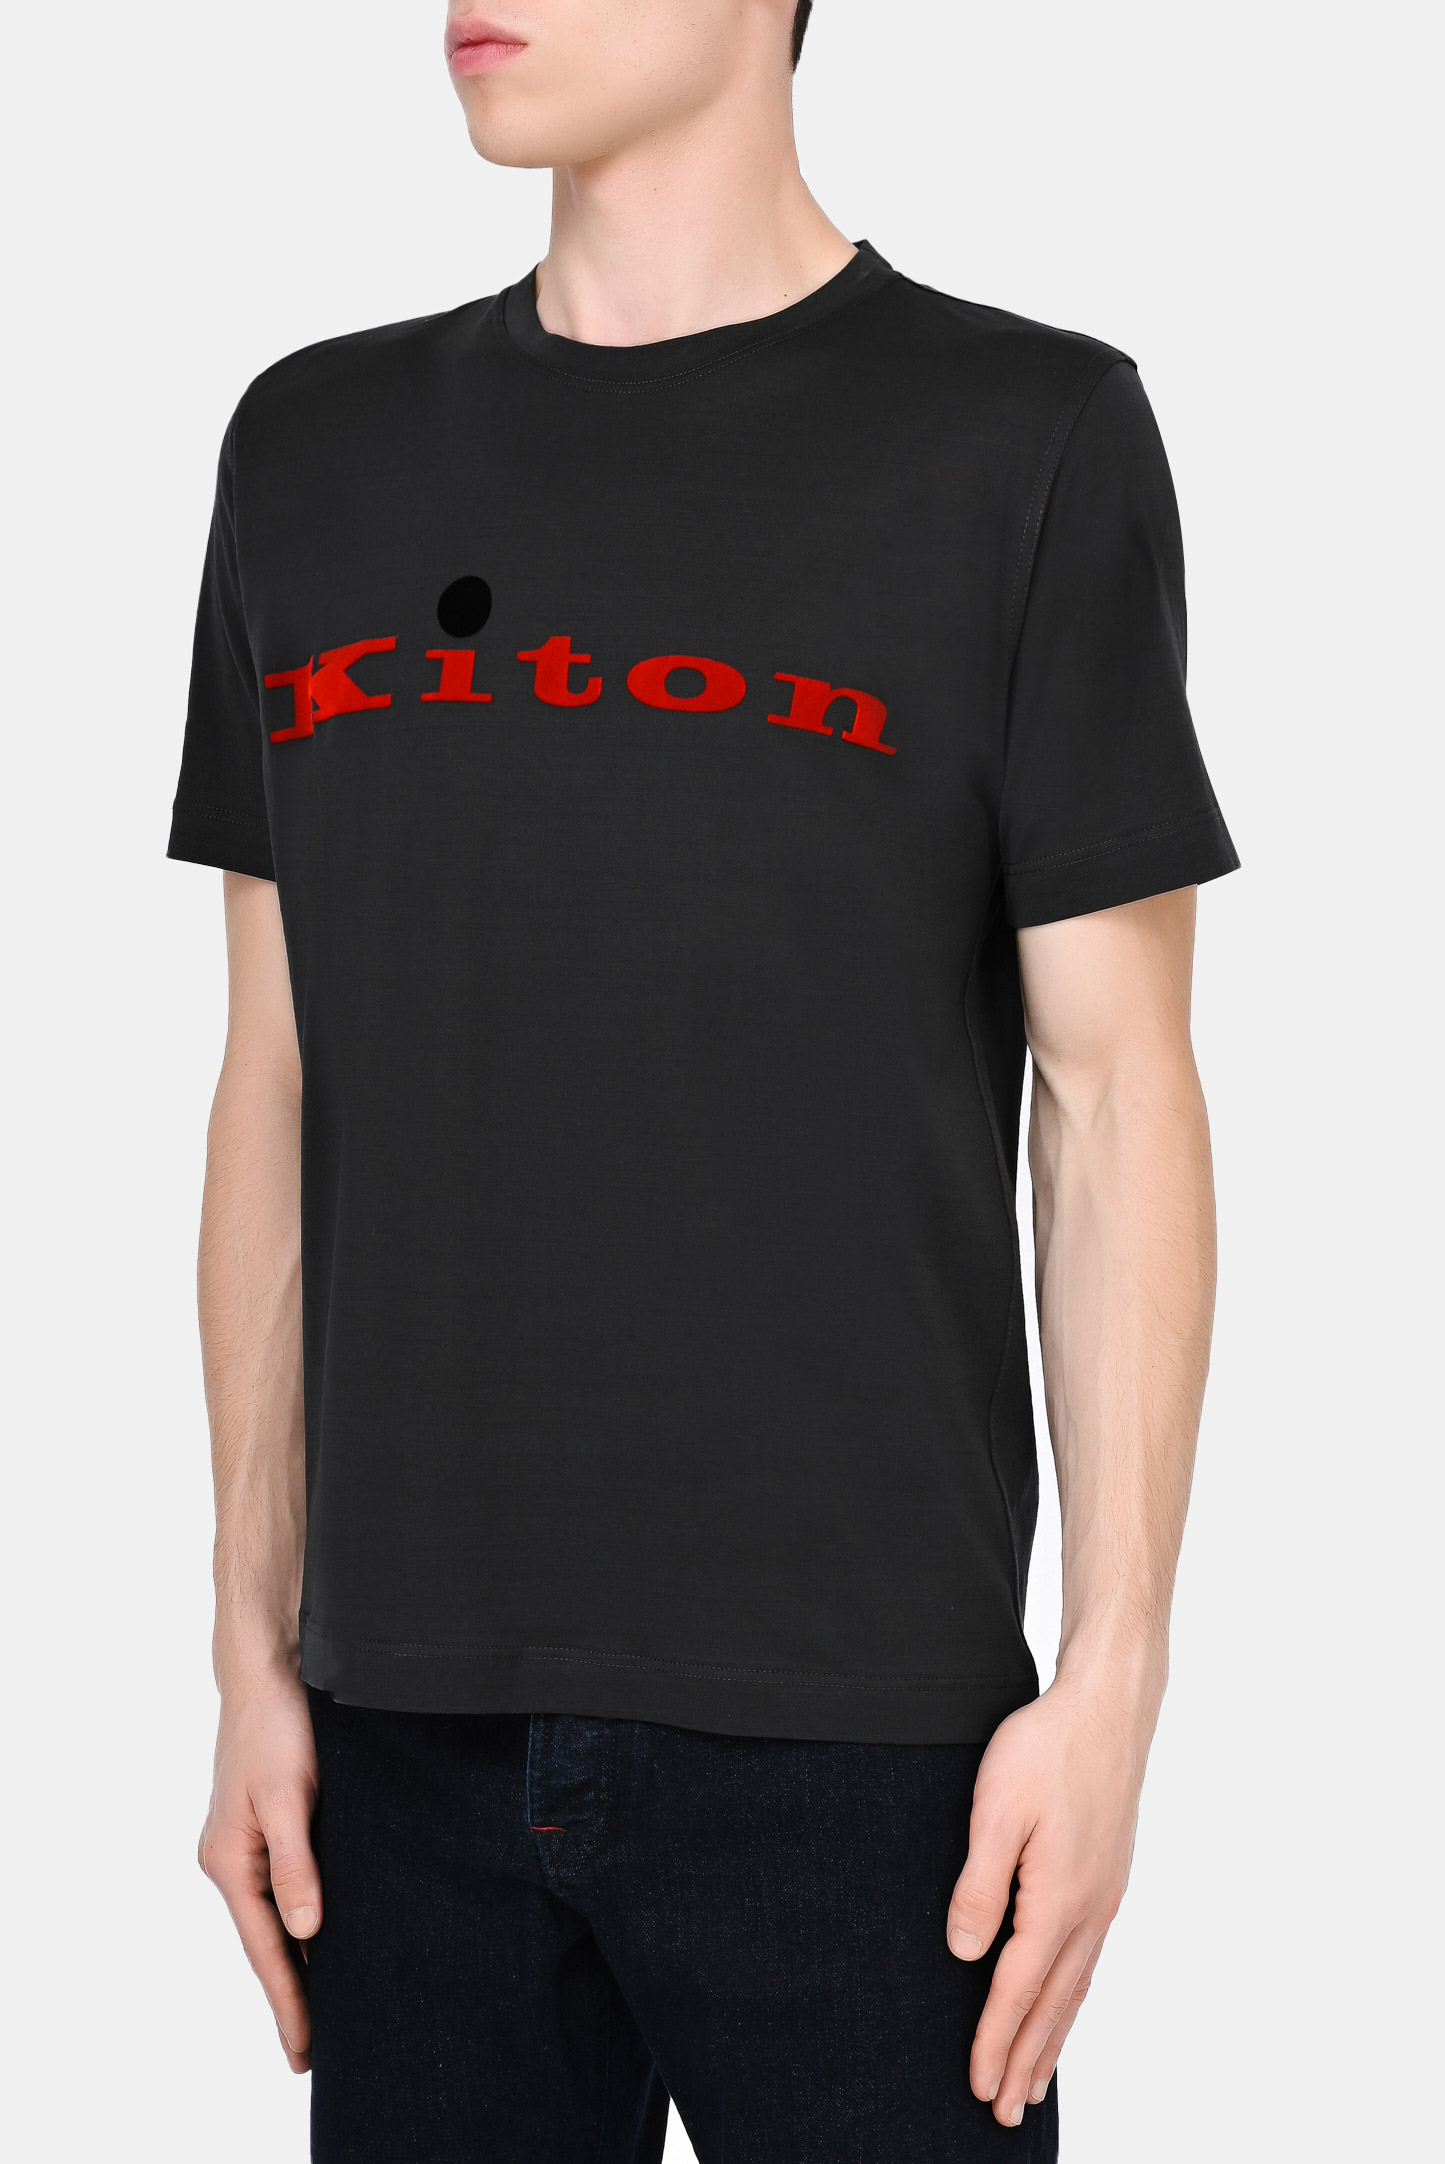 Футболка KITON UK1164W21, цвет: Серый, Мужской